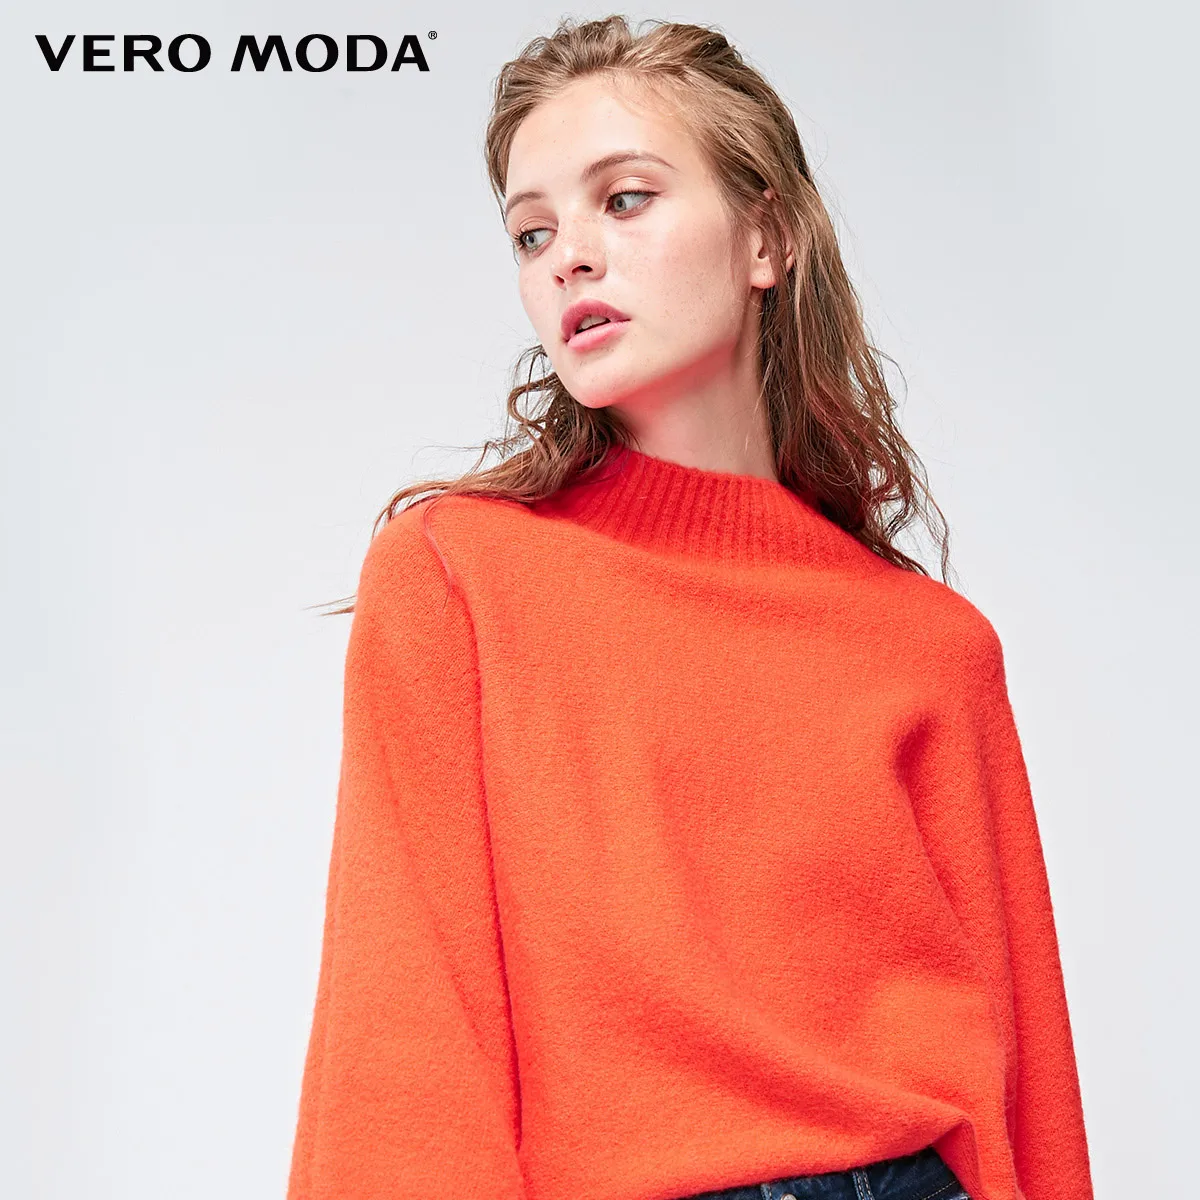 Vero Moda Women's Bat Sleeve Solid Color Knit Top Sweater | 318313513